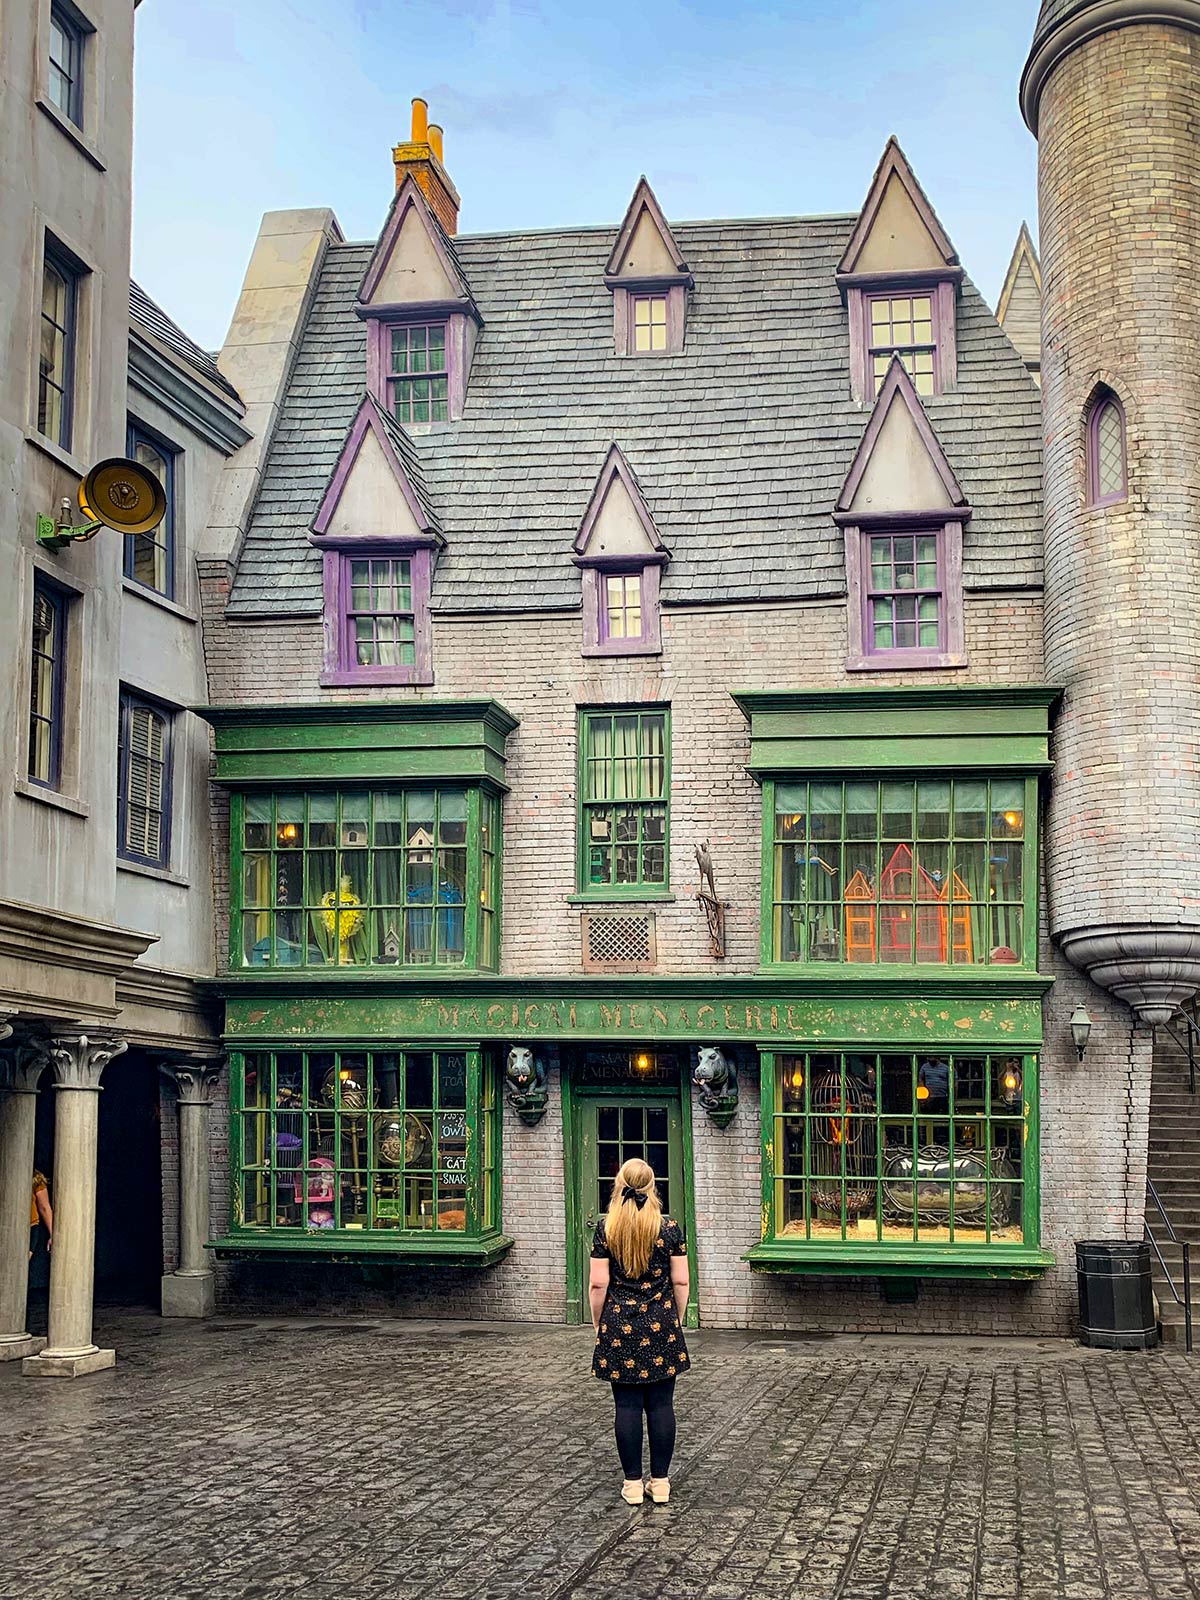 Monde de Harry Potter, Universal Orlando, Floride, États-Unis / Wizarding World of Harry Potter, Universal Orlando, Florida, USA